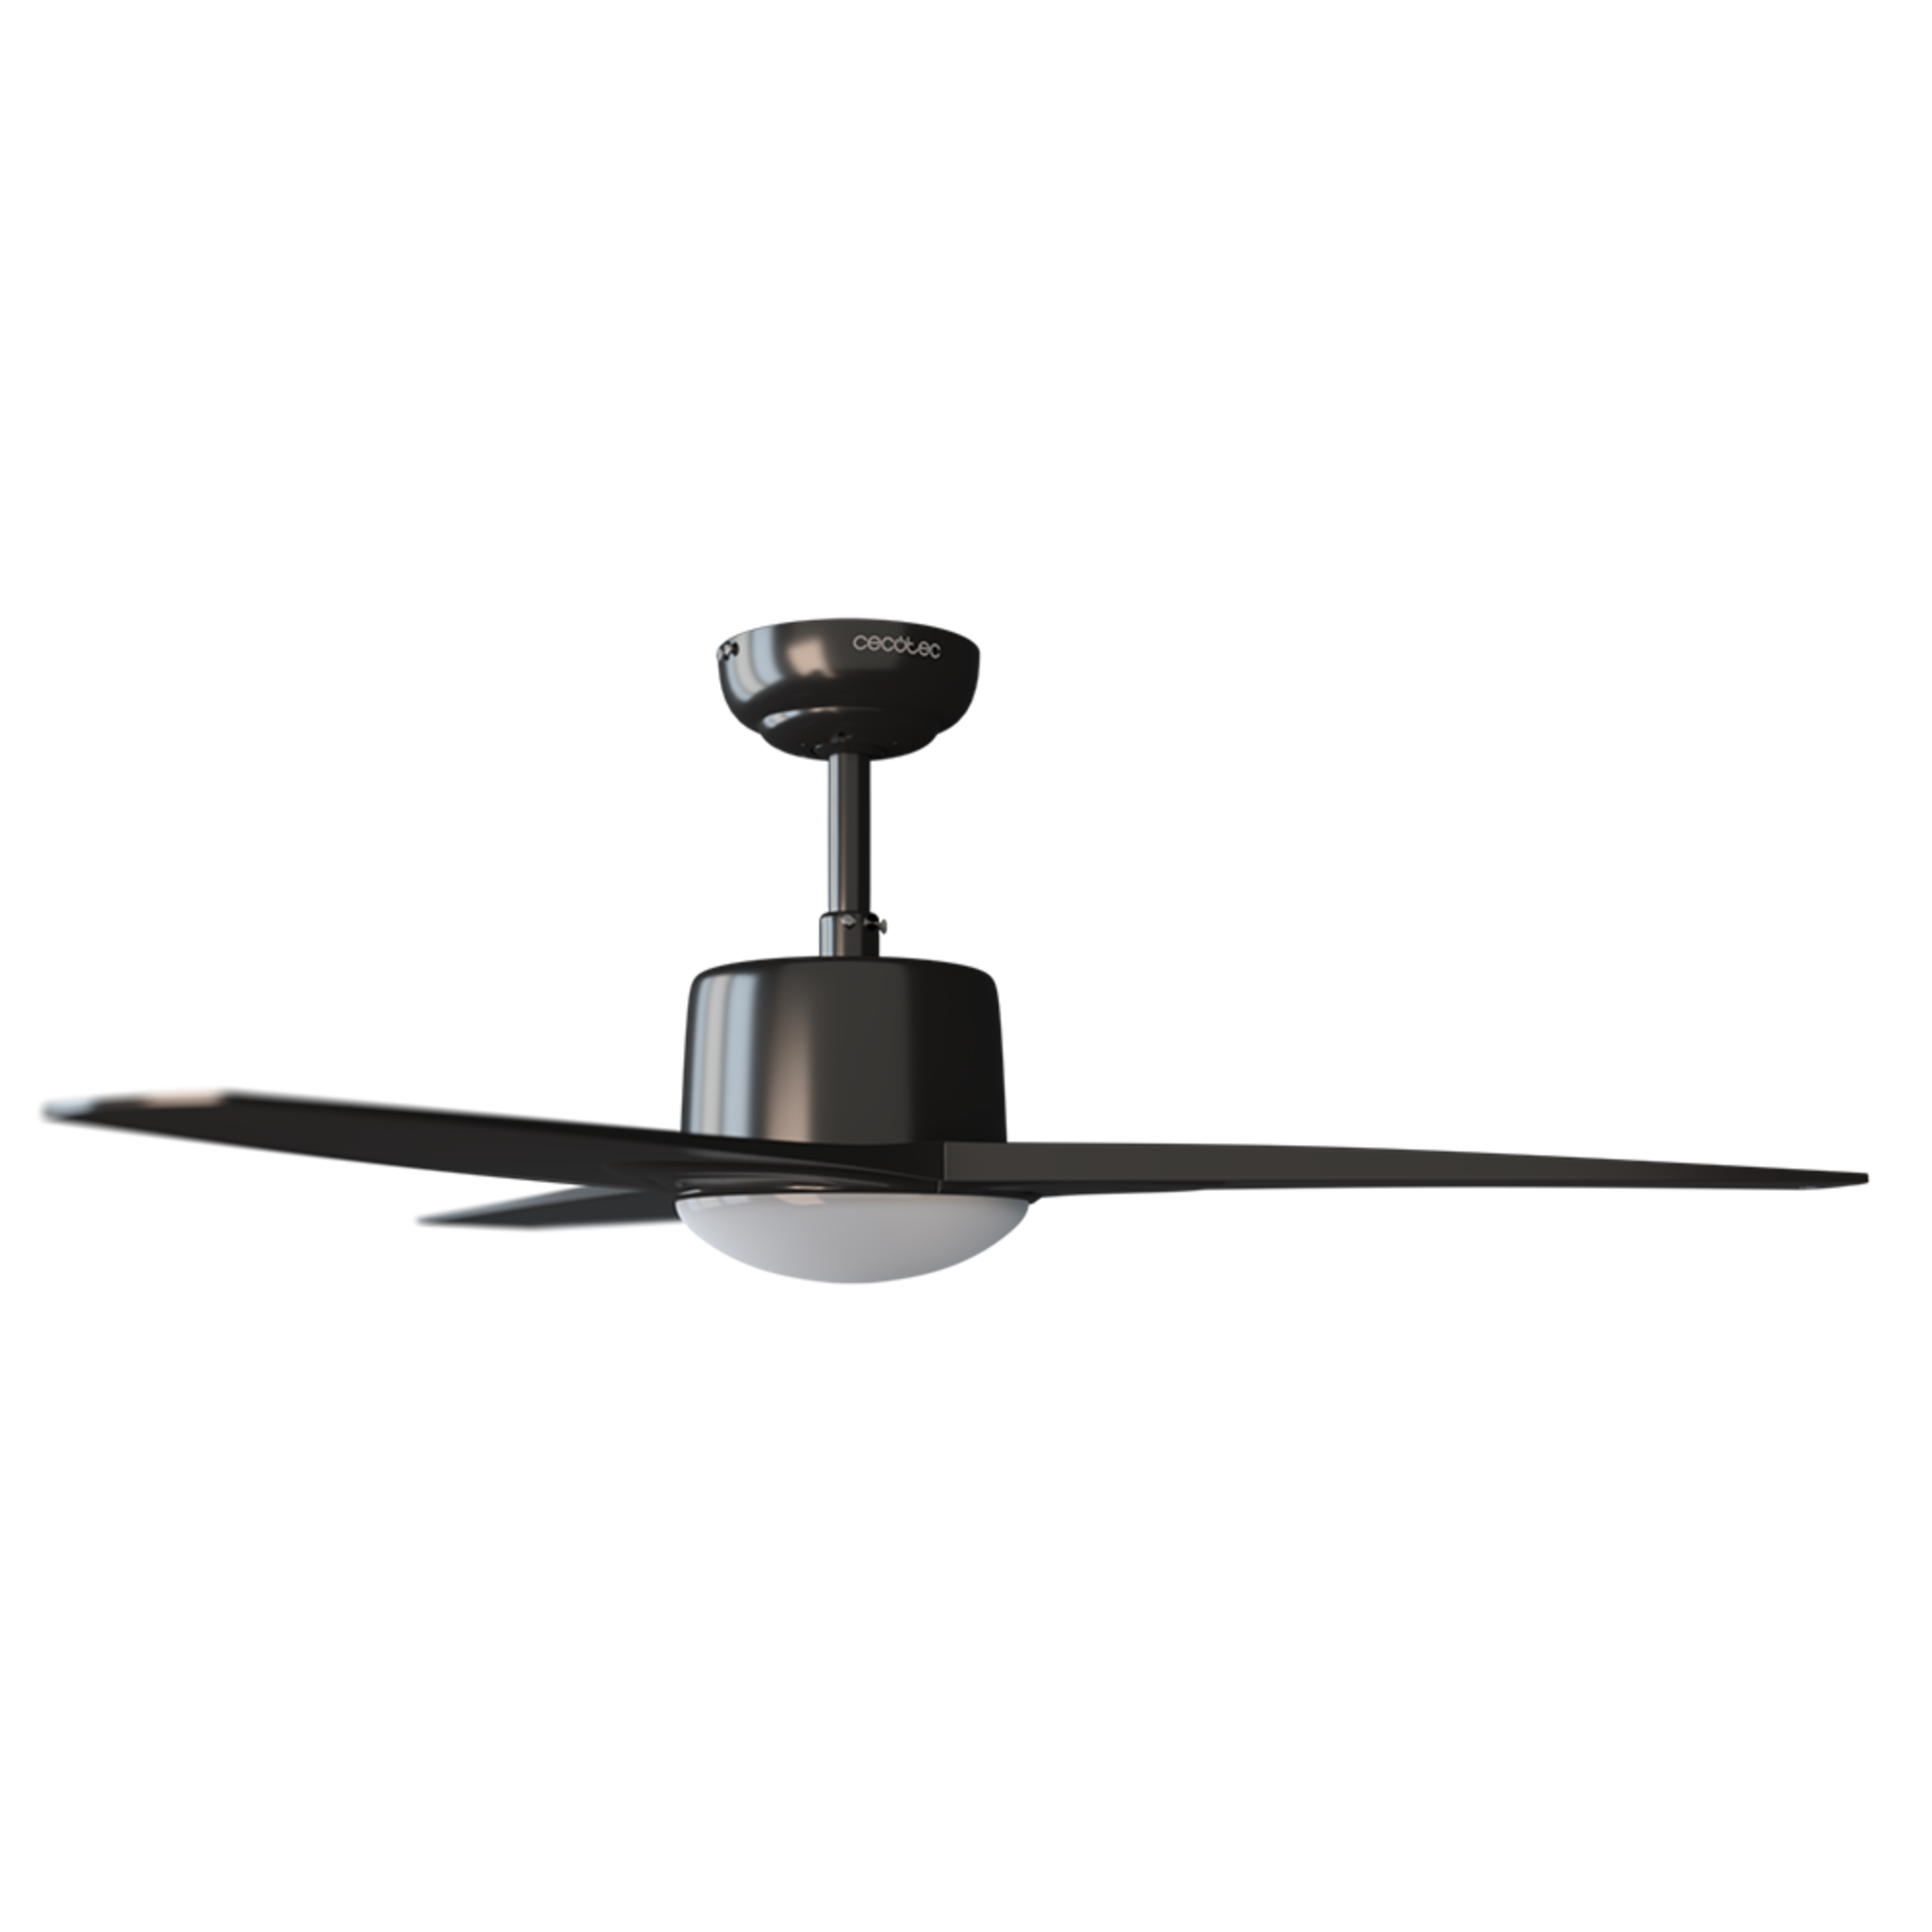 Ventilador de Techo con Mando a Distancia, Temporizador y Luz LED EnergySilence Aero 470. 55 W, 106 cm de Diámetro, 3 Aspas, 3 Velocidades, Función Invierno, Gris Marengo